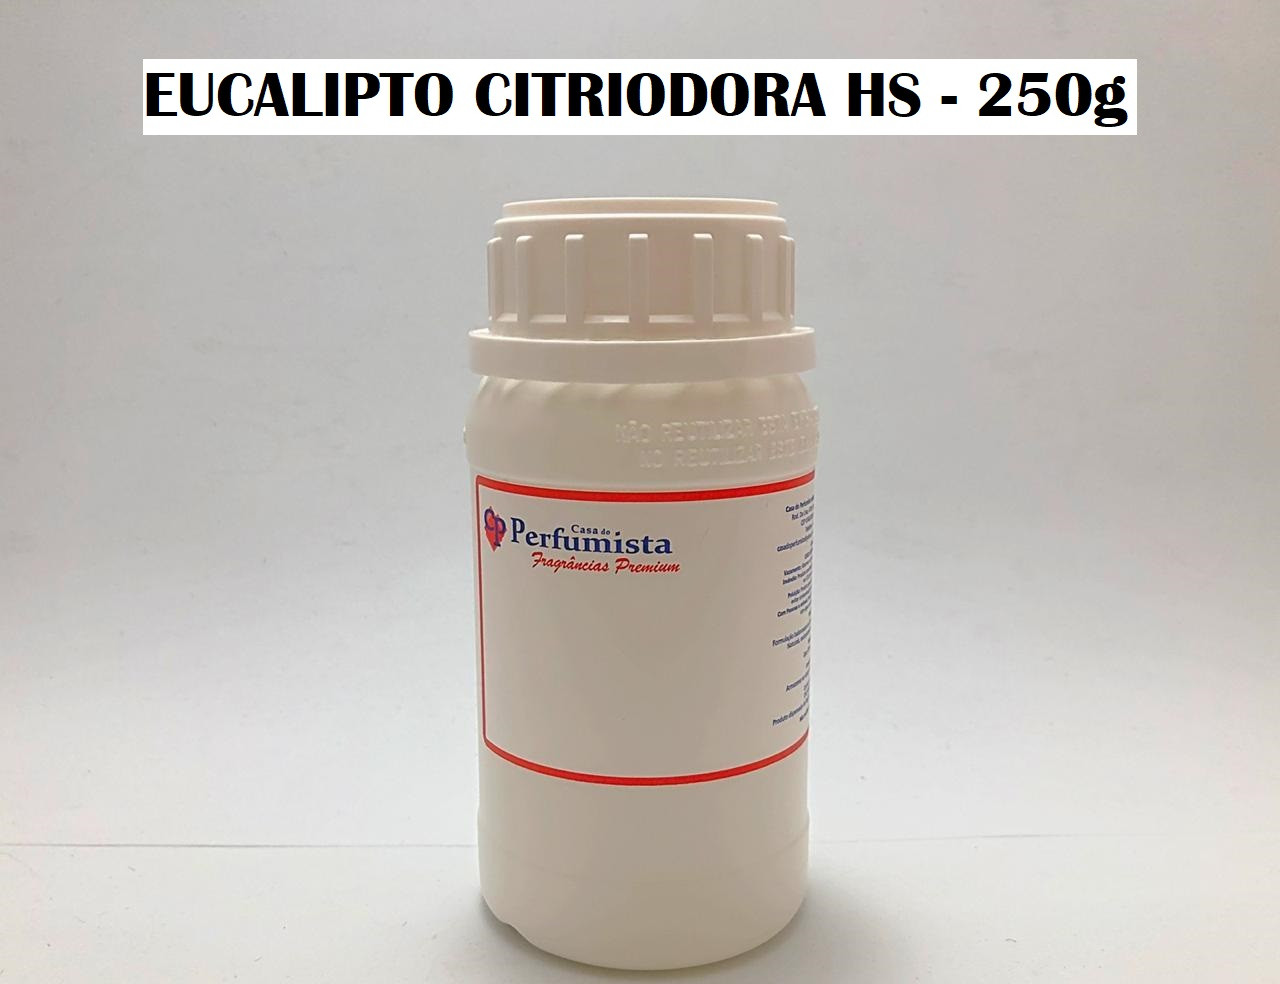 EUCALIPTO CITRIODORA HS - 250g